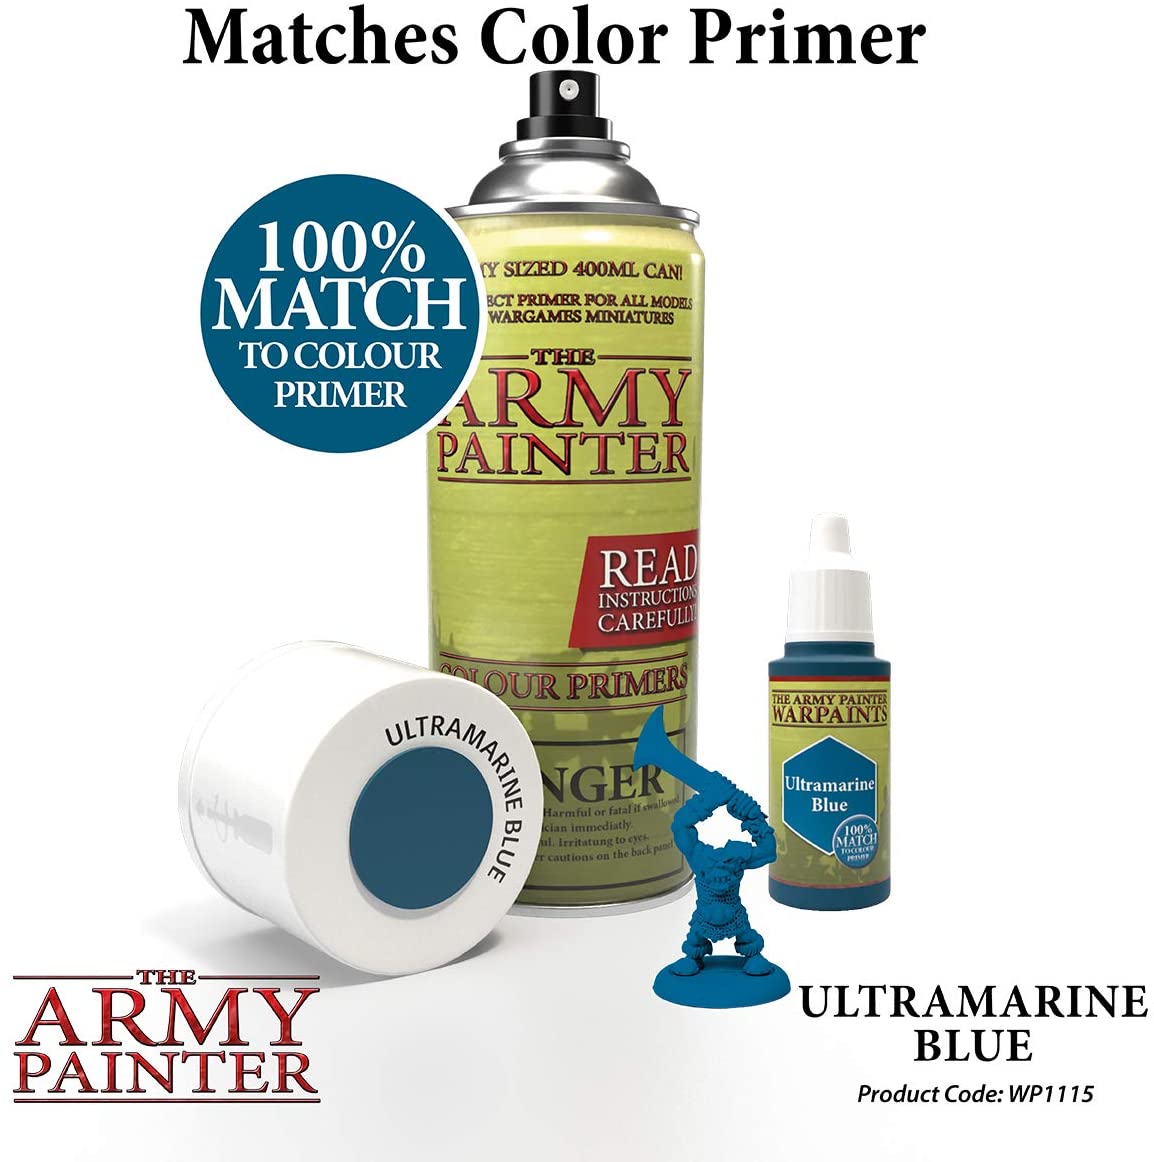 The Army Painter - Warpaints: Ultramarine Blue (18ml/0.6oz)